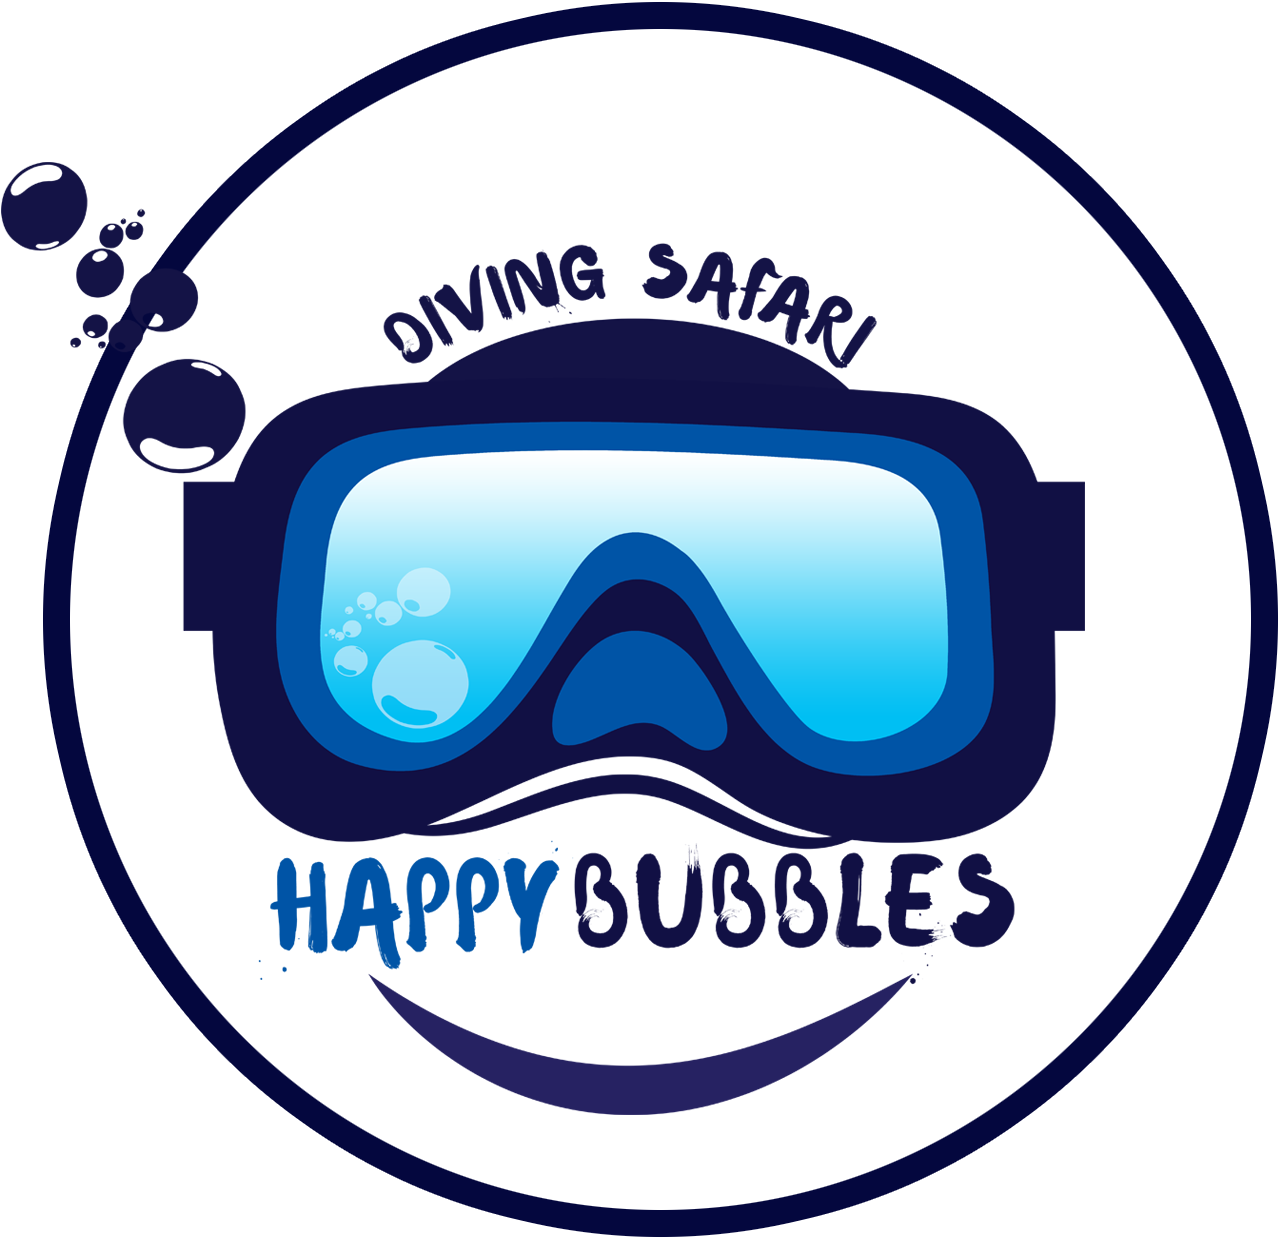 Happy Bubbles Diving Safari Logo PNG image